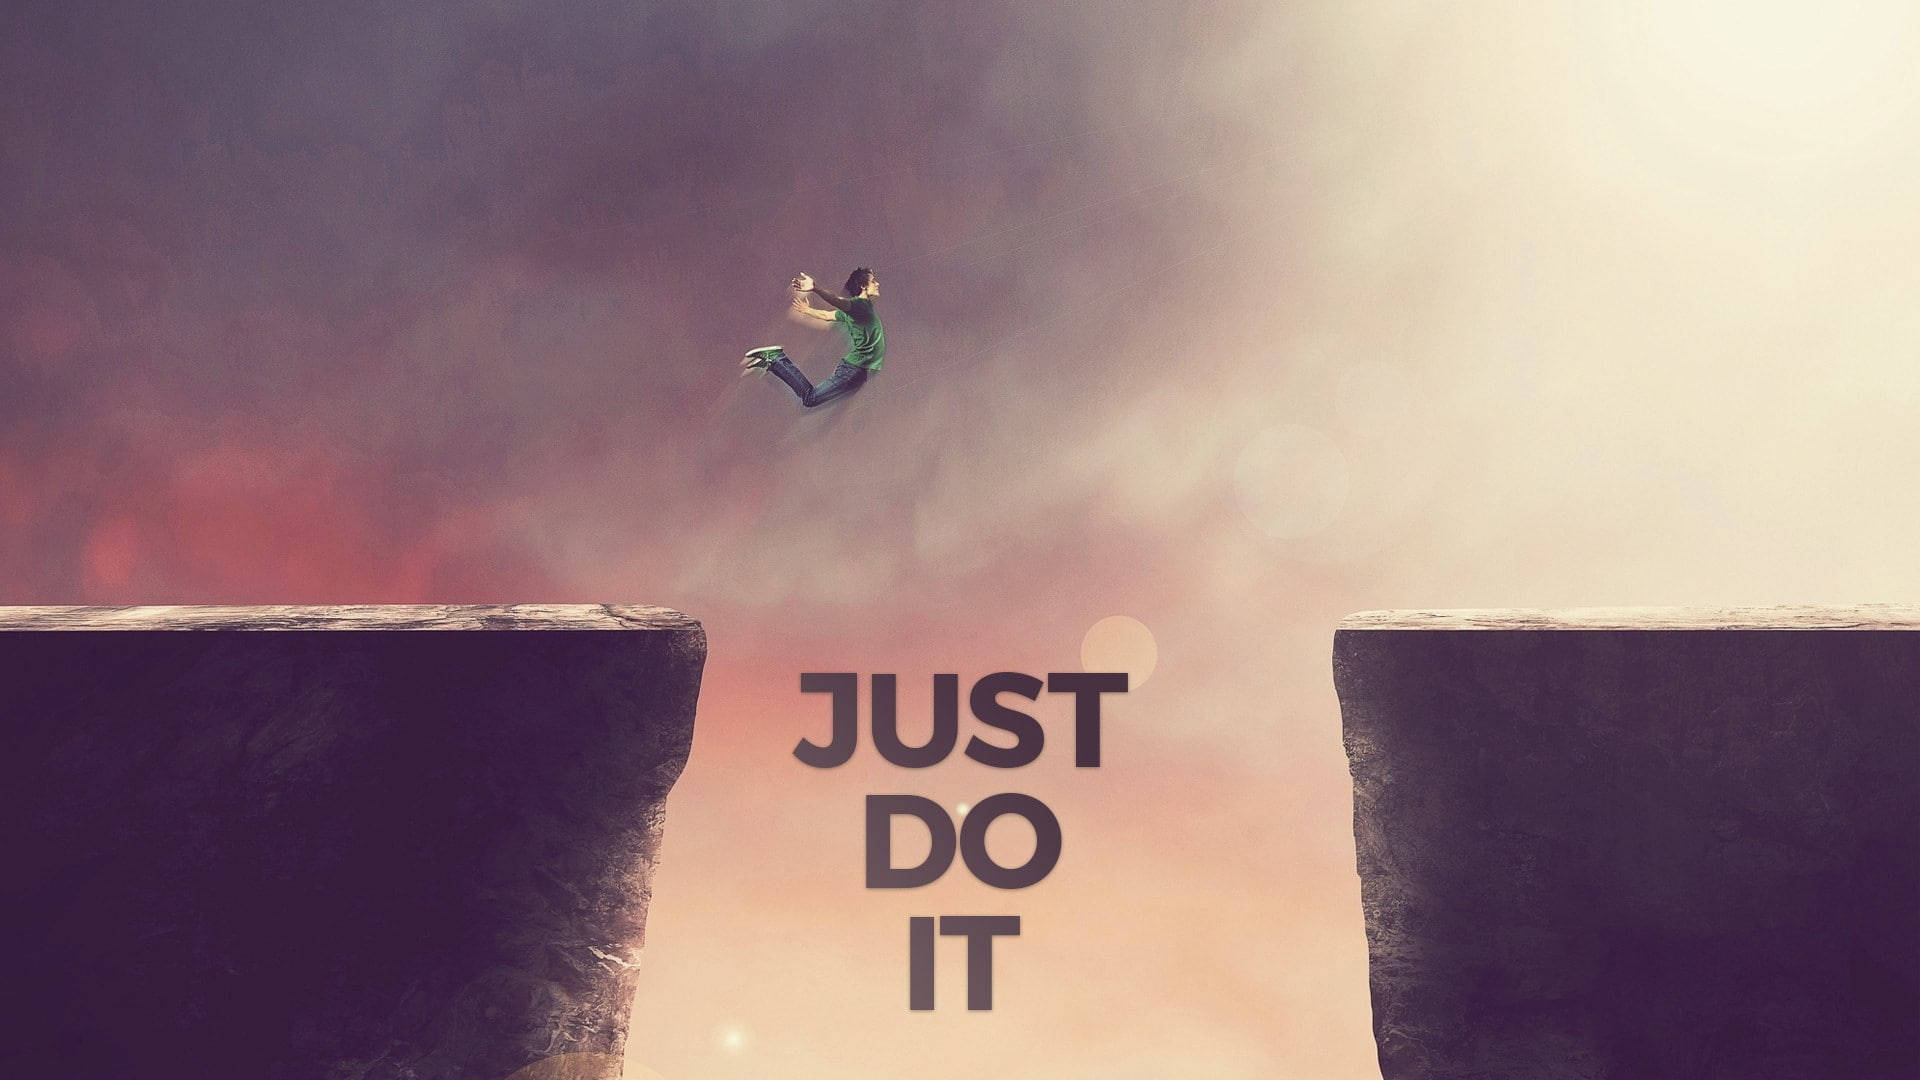 Minimalist Motivational Nike's Theme Wallpaper